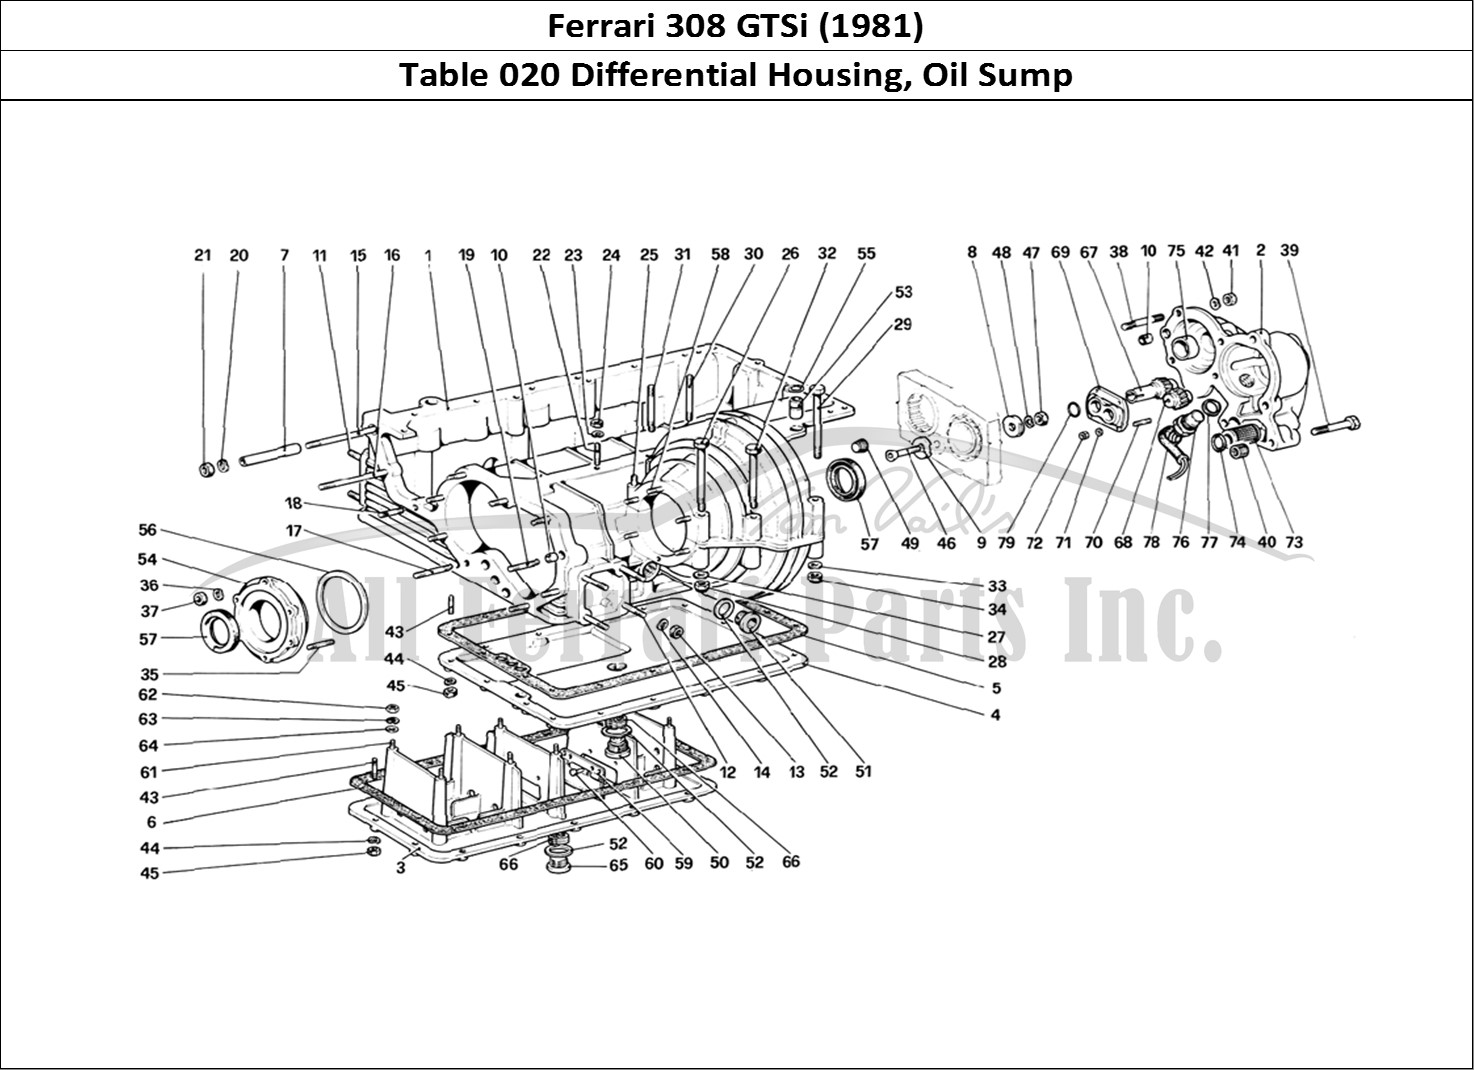 Ferrari Parts Ferrari 308 GTBi (1981) Page 020 Gearbox - Differential Ho